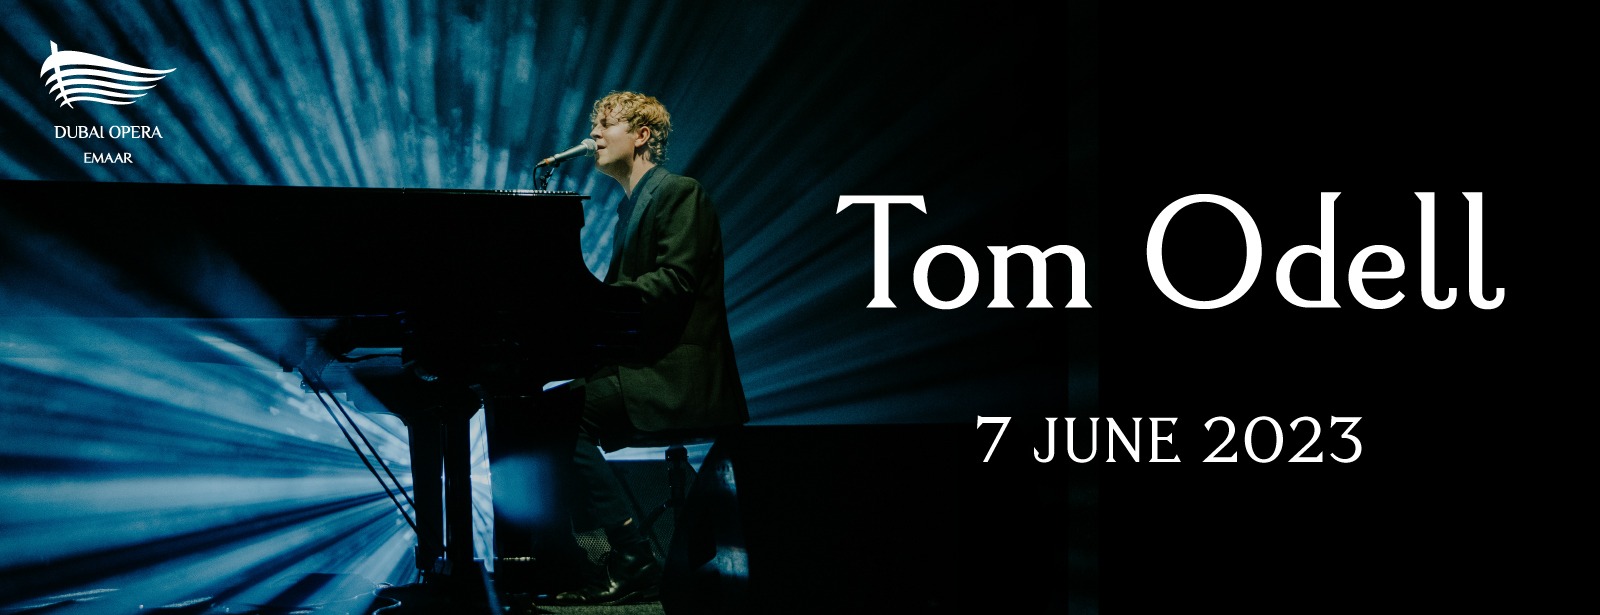 Tom Odell Live in Dubai Opera - Coming Soon in UAE